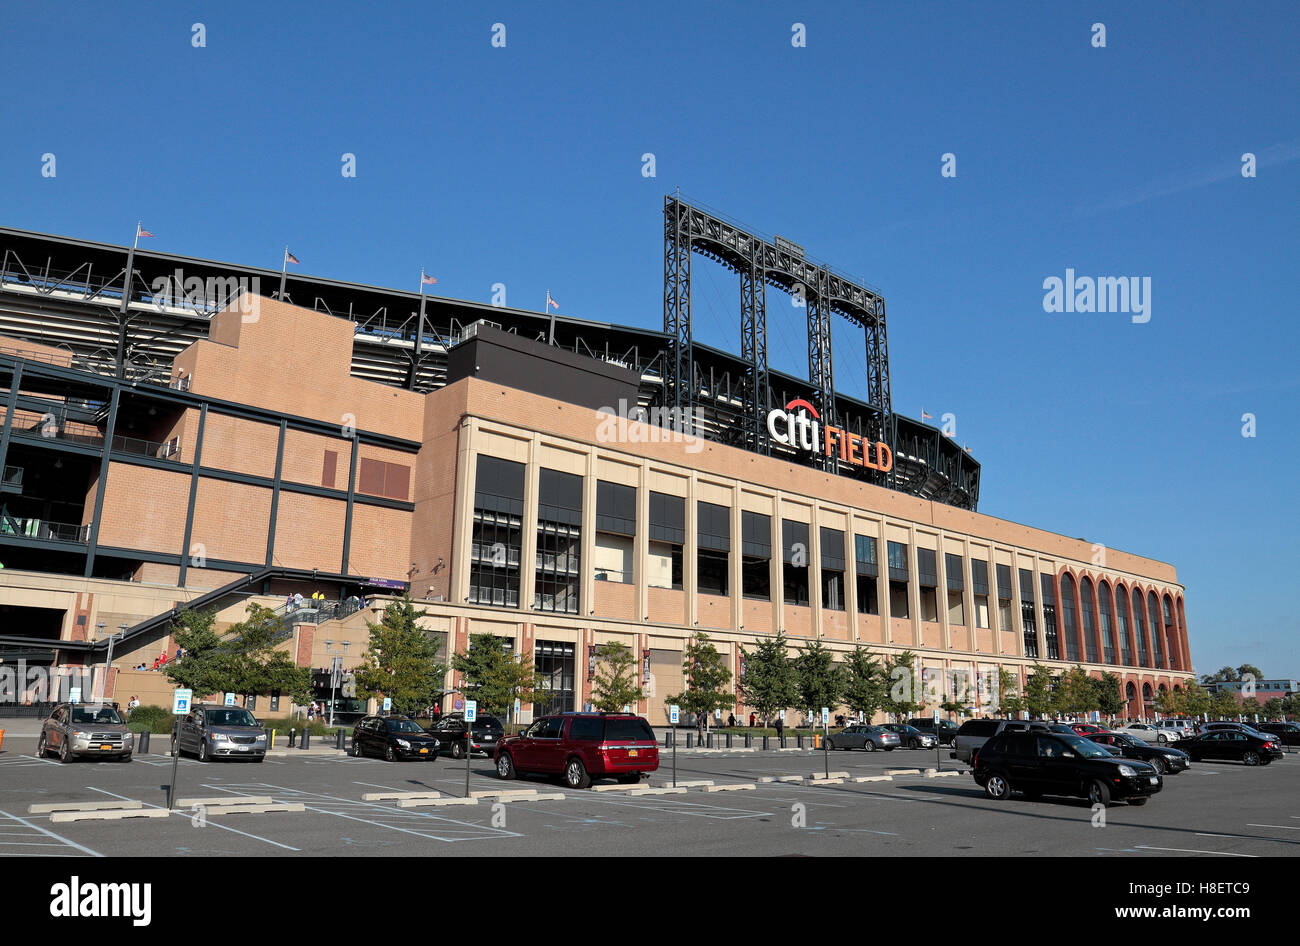 Vue extérieure du Citi Field, le stade de la MLB home New York Mets devant un jeu de 2016, New York, United States. Banque D'Images